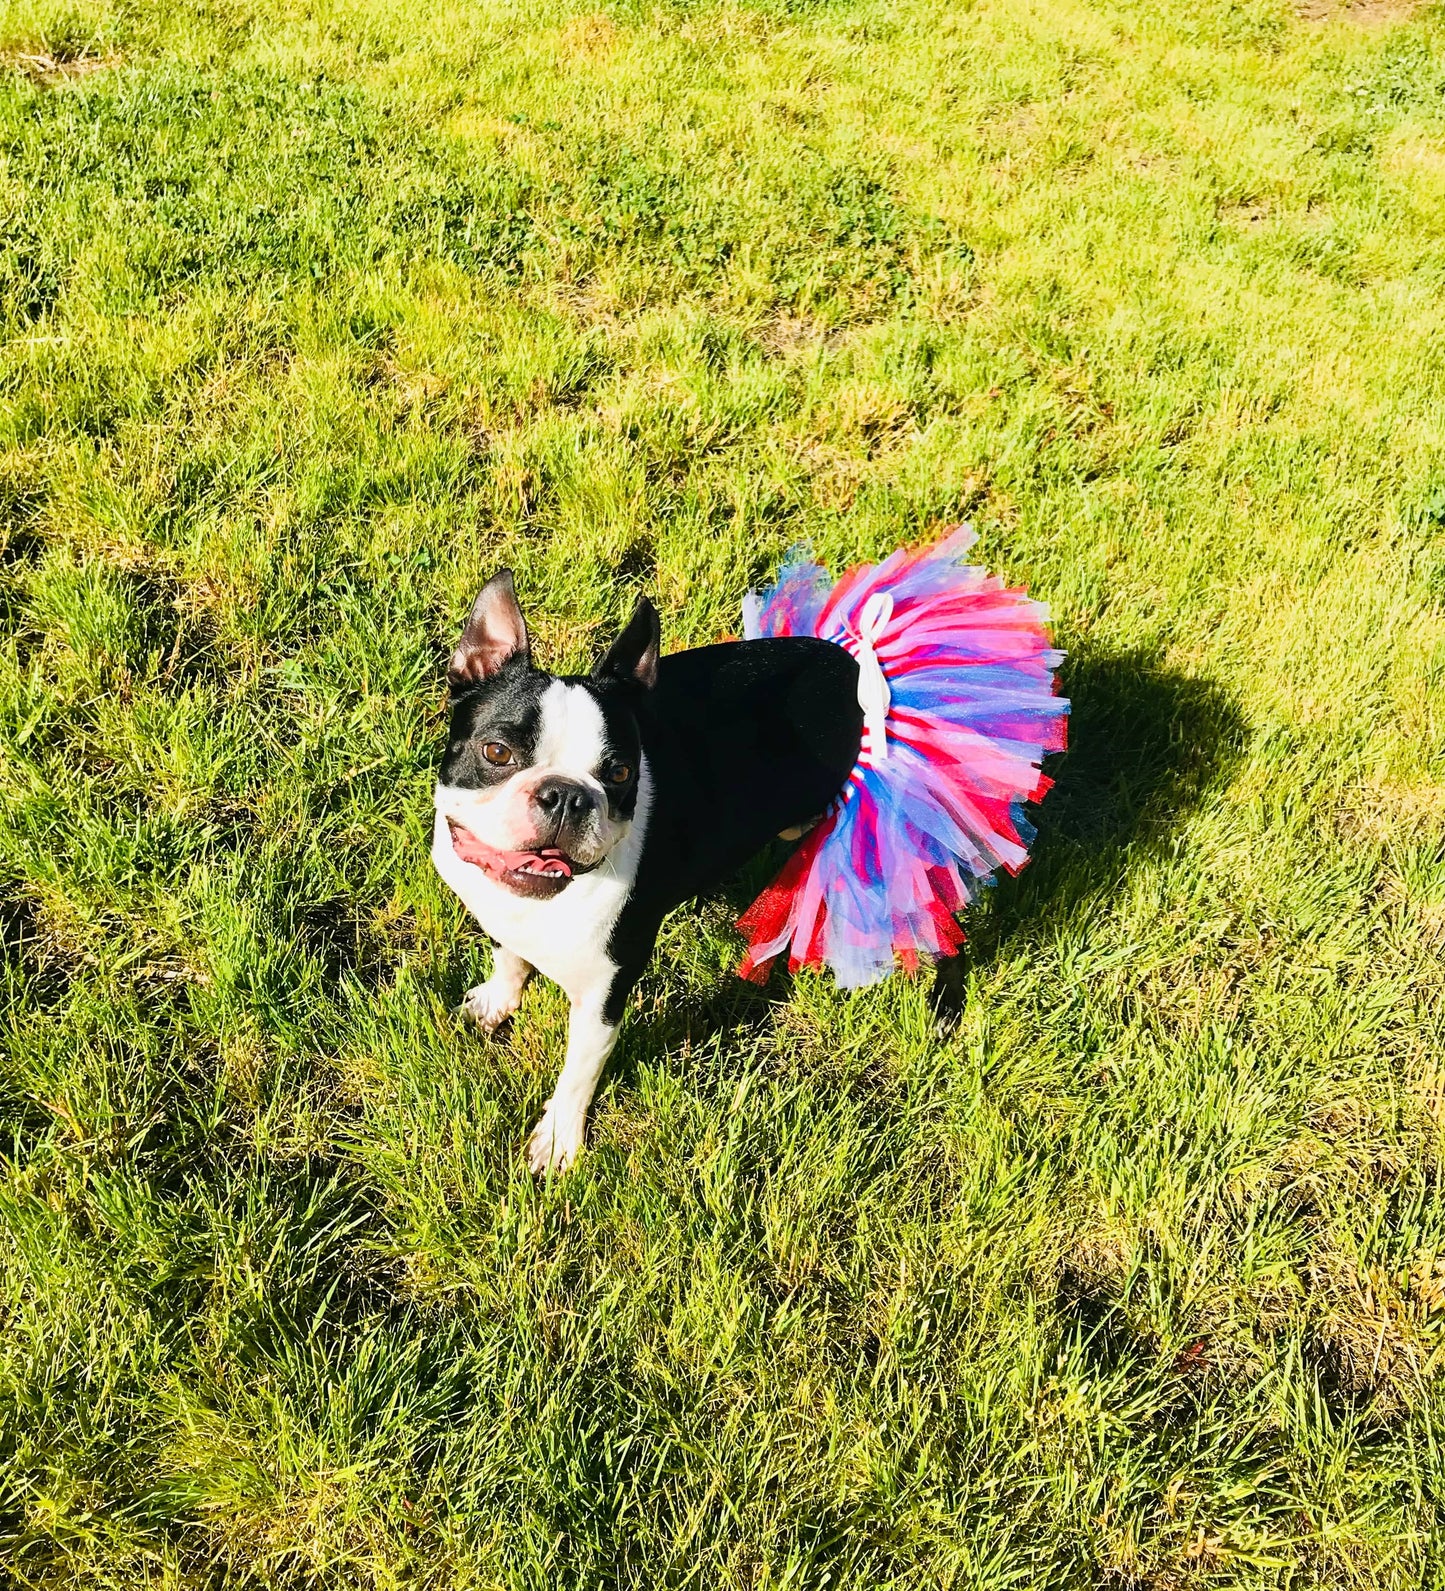 4th Of July Dog Tutu Skirt | XS-XXXL